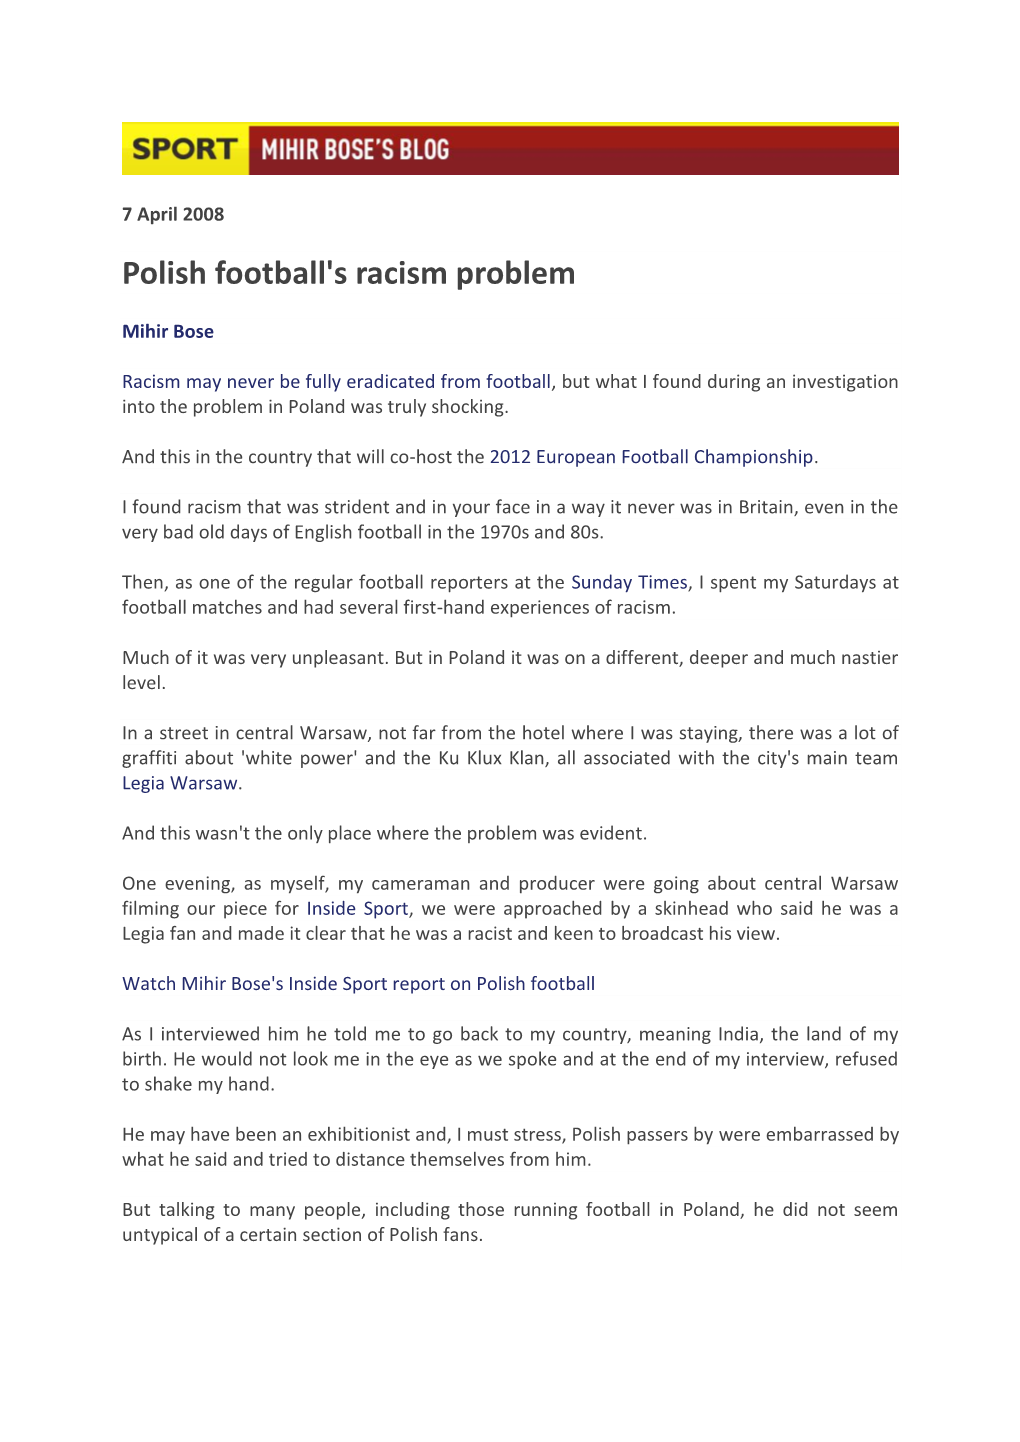 Polish Football's Racism Problem